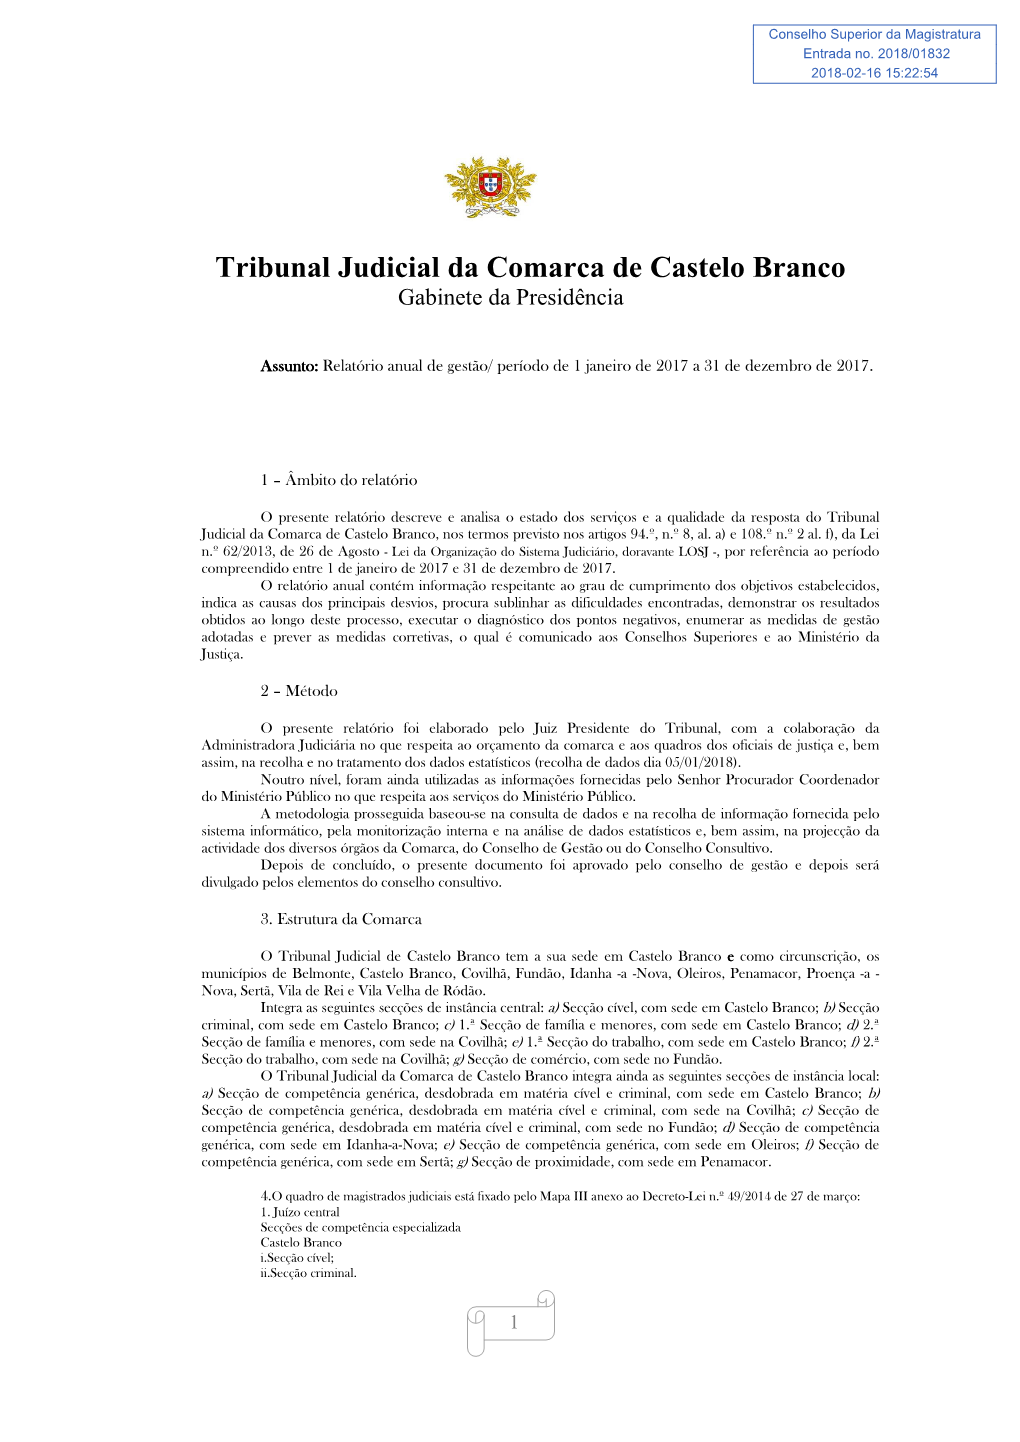 Tribunal Judicial Da Comarca De Castelo Branco Gabinete Da Presidência